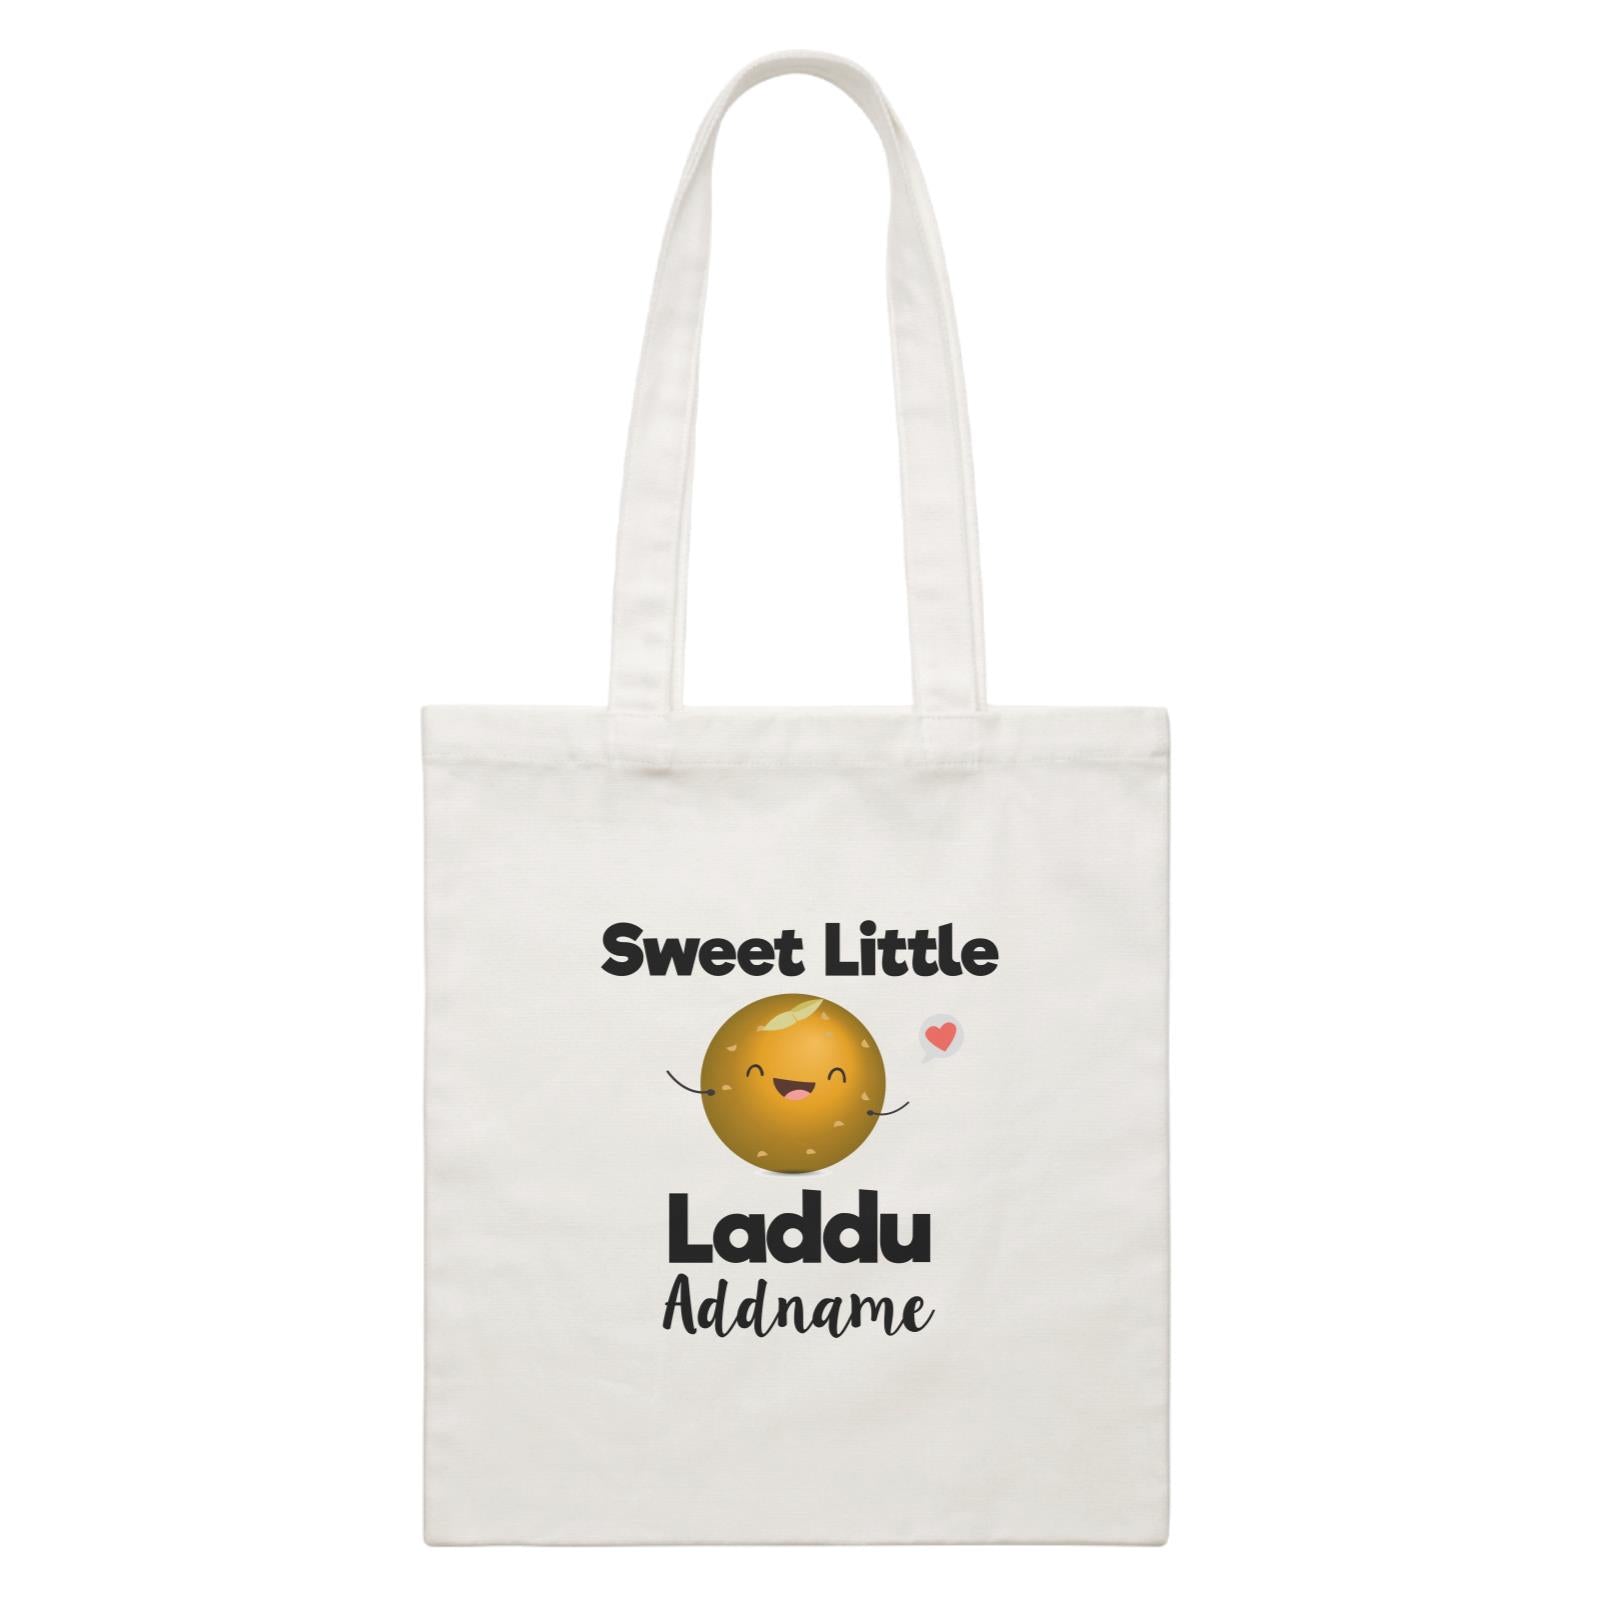 Sweet Little Laddu Addname White Canvas Bag